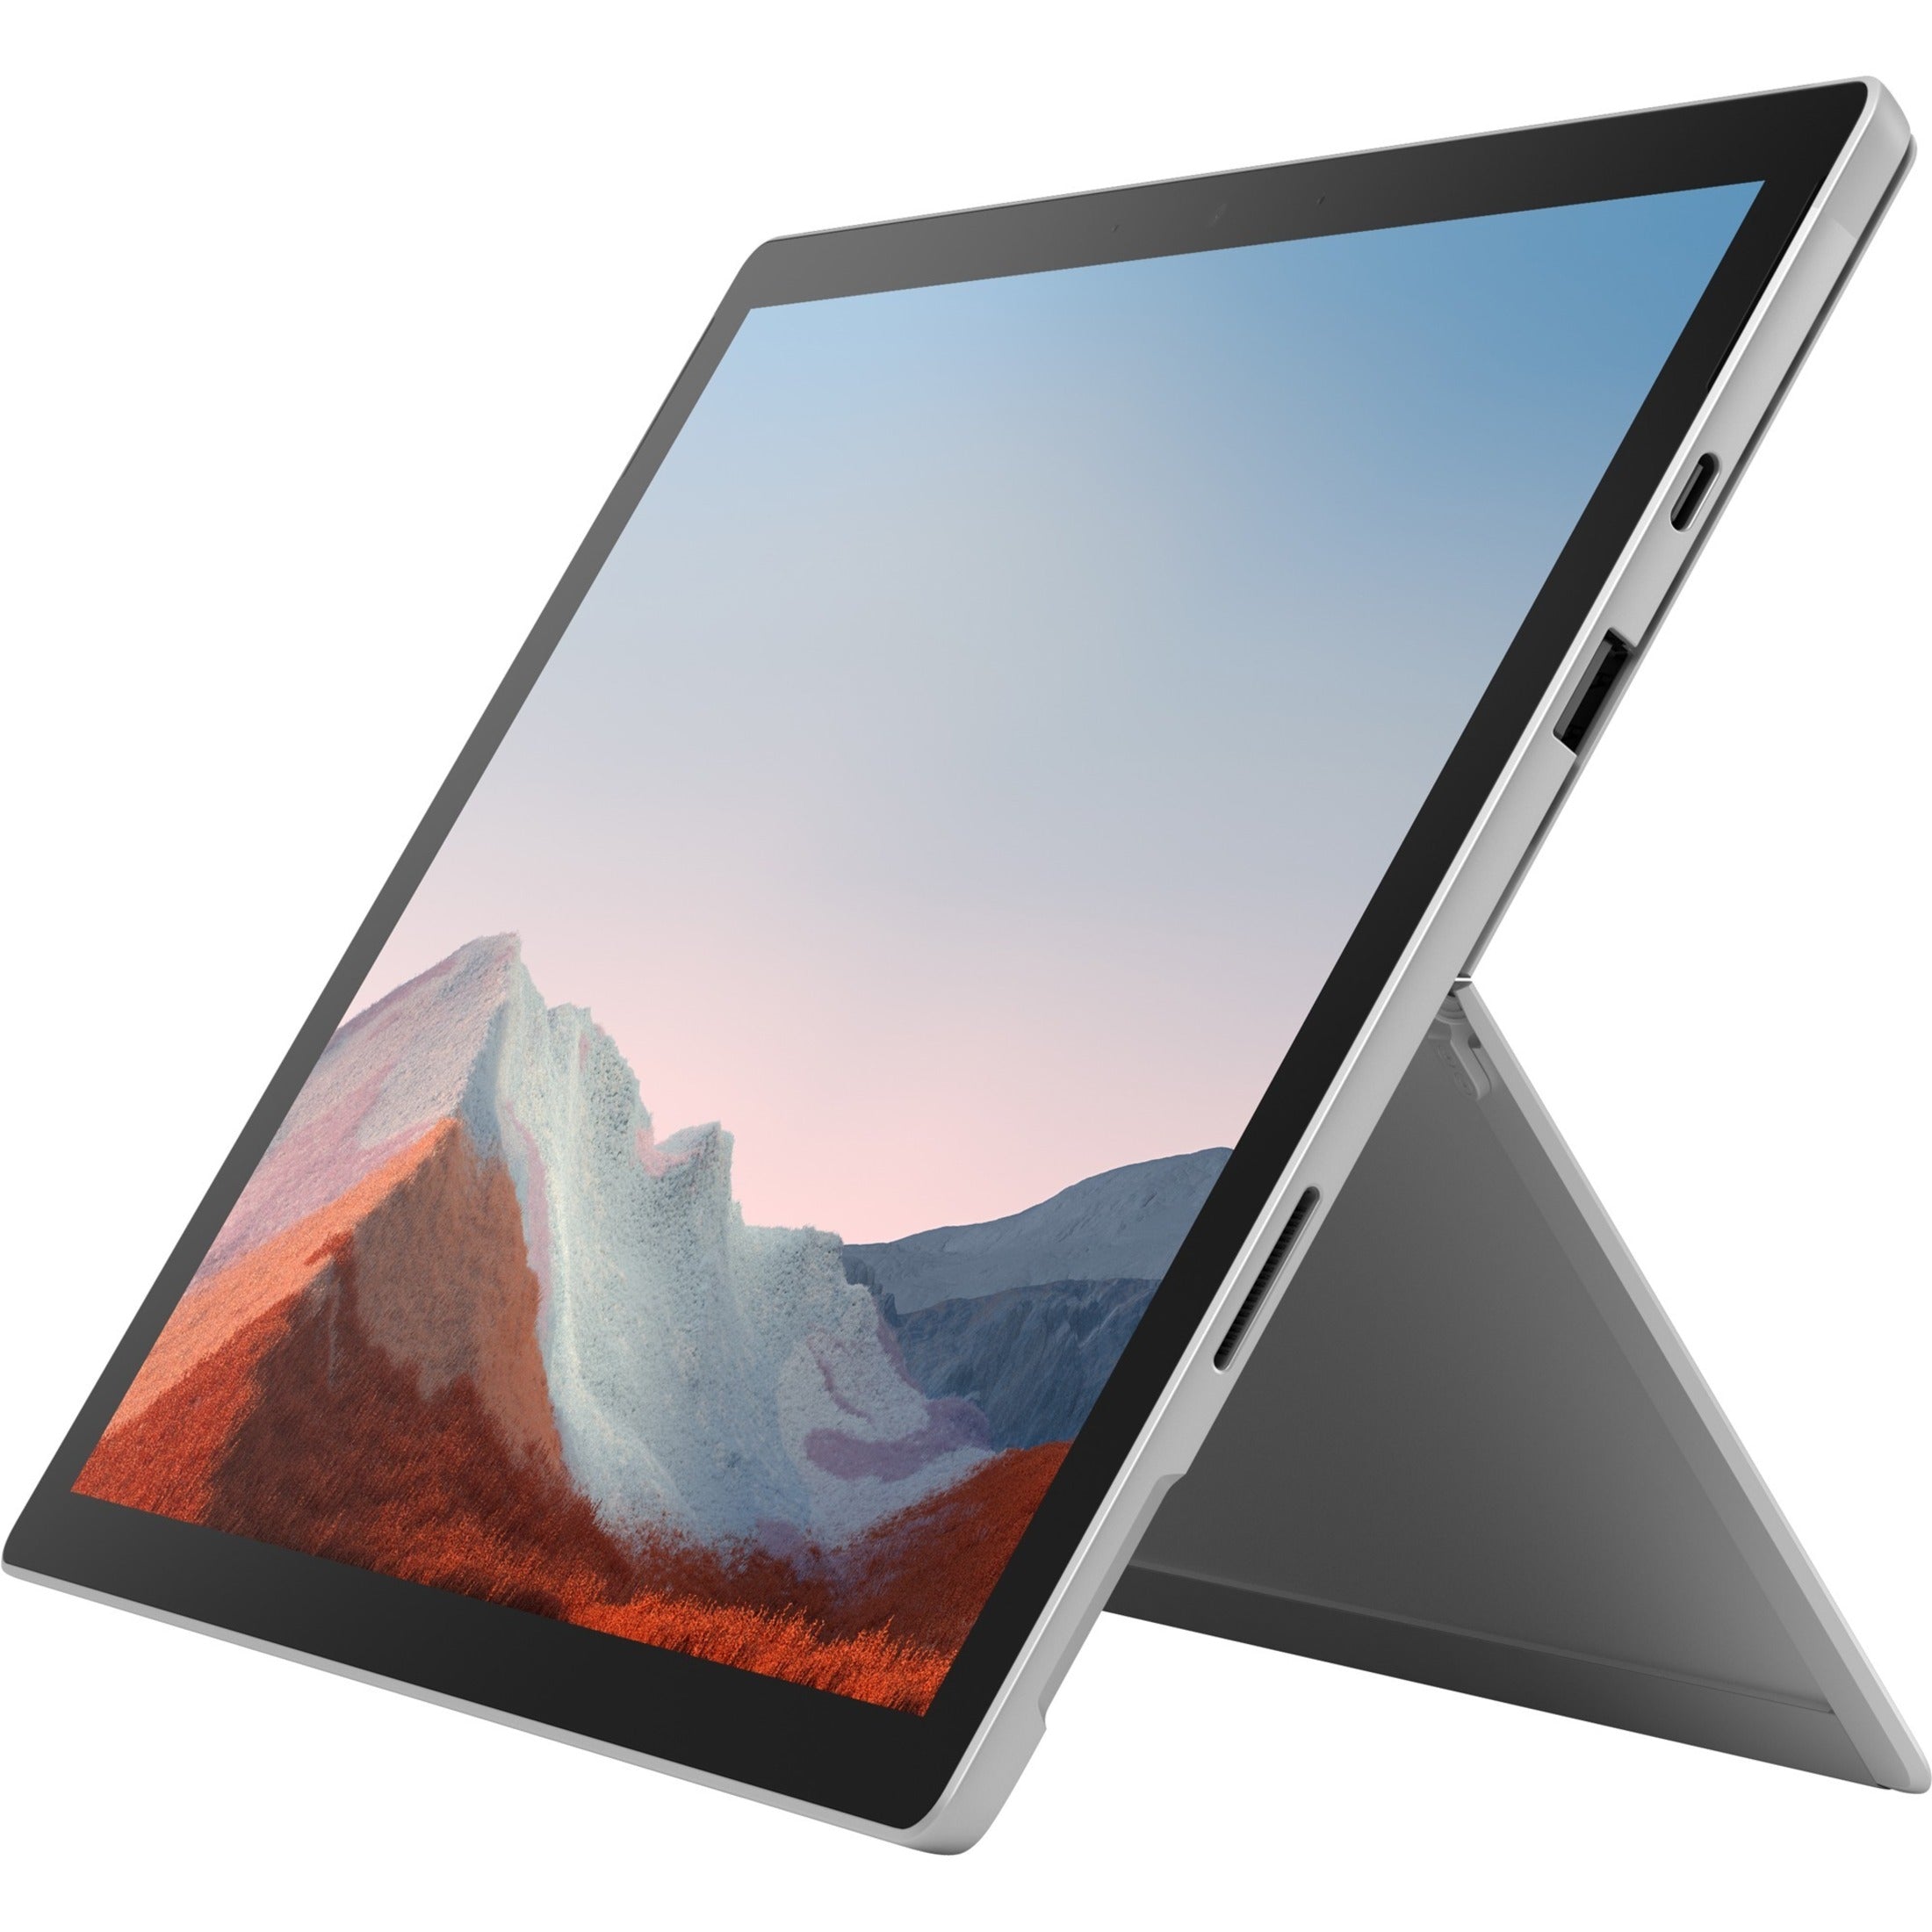 Microsoft 1Z7-00001 Surface Pro 7+ Tablet, 12.3 PixelSense Display, Core i5, 8GB RAM, 256GB SSD, LTE, Windows 10 Pro